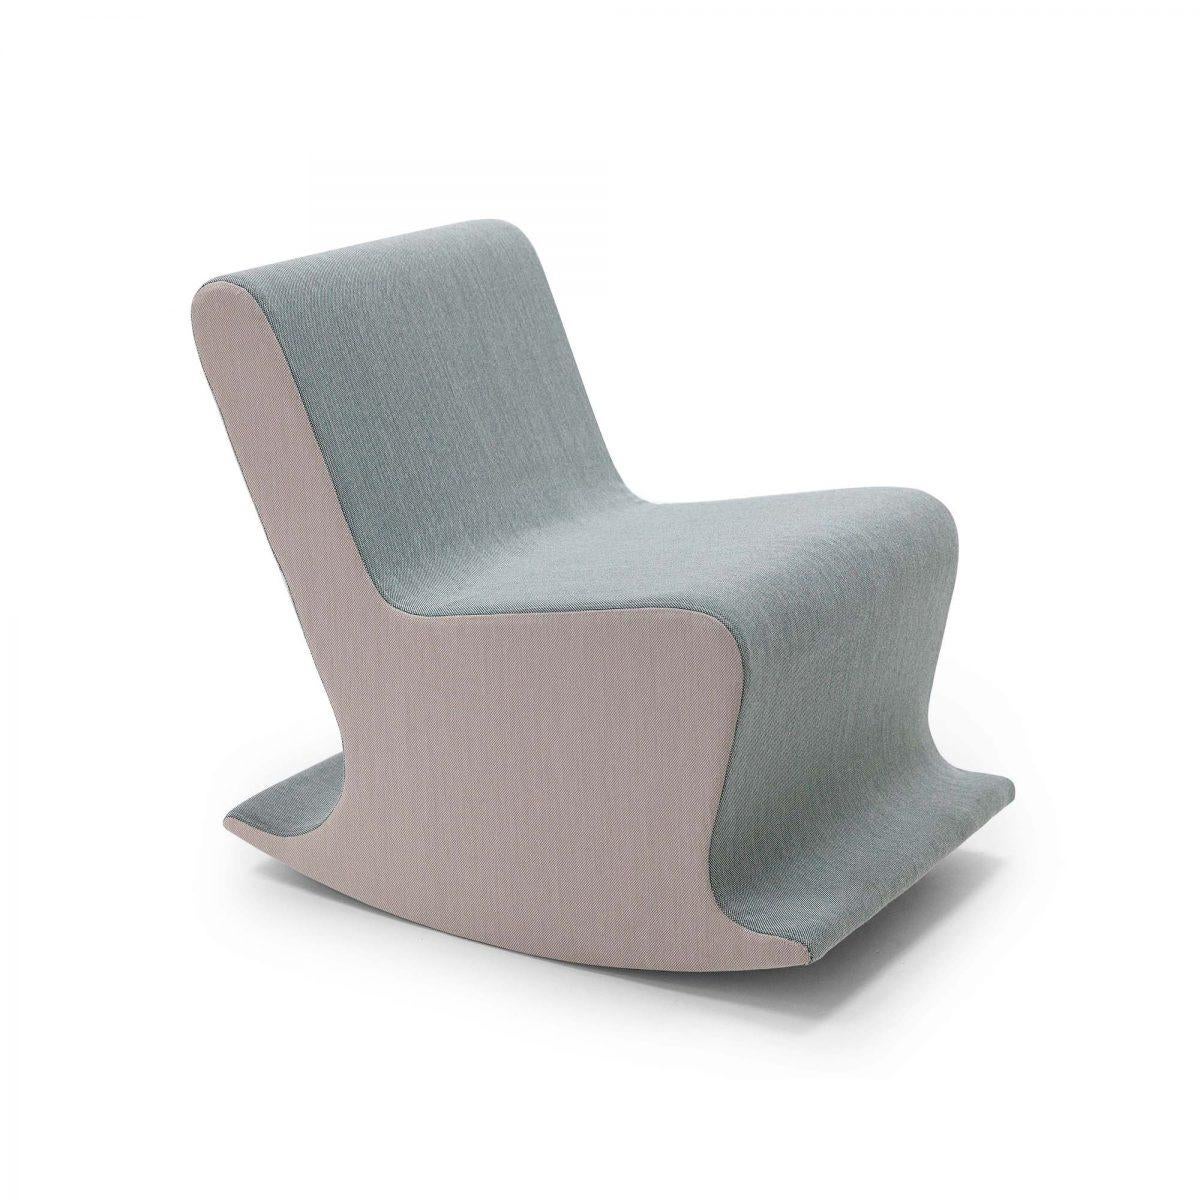 Fabric Dondolo Rocking Chair Designed by Claudio Colucci